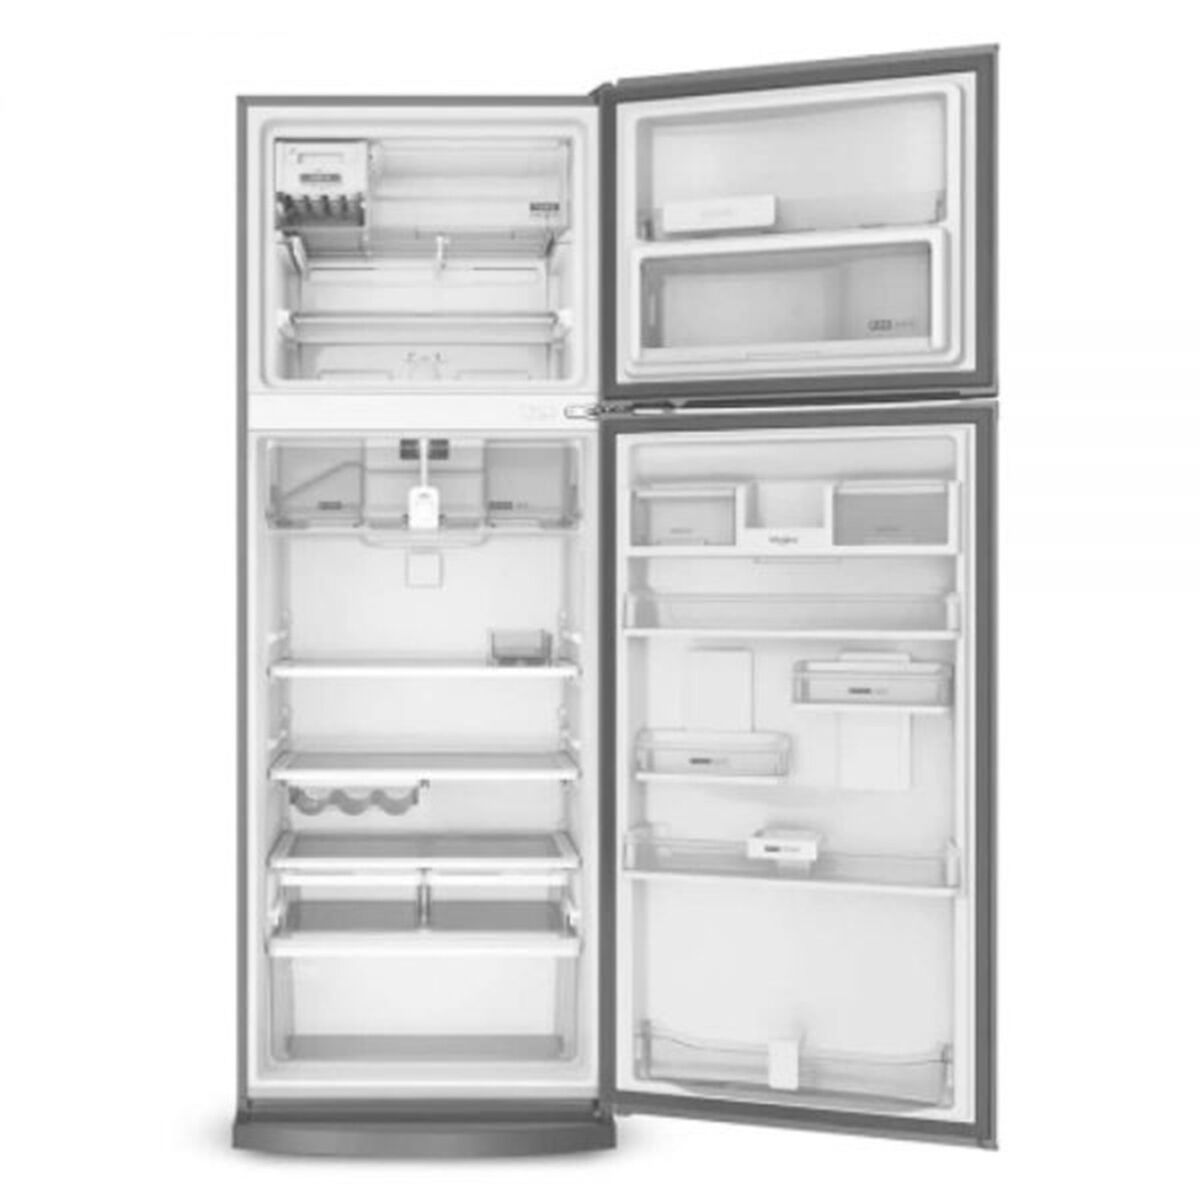 Refrigerador No Frost Whirlpool WRM57K1 500 lts.